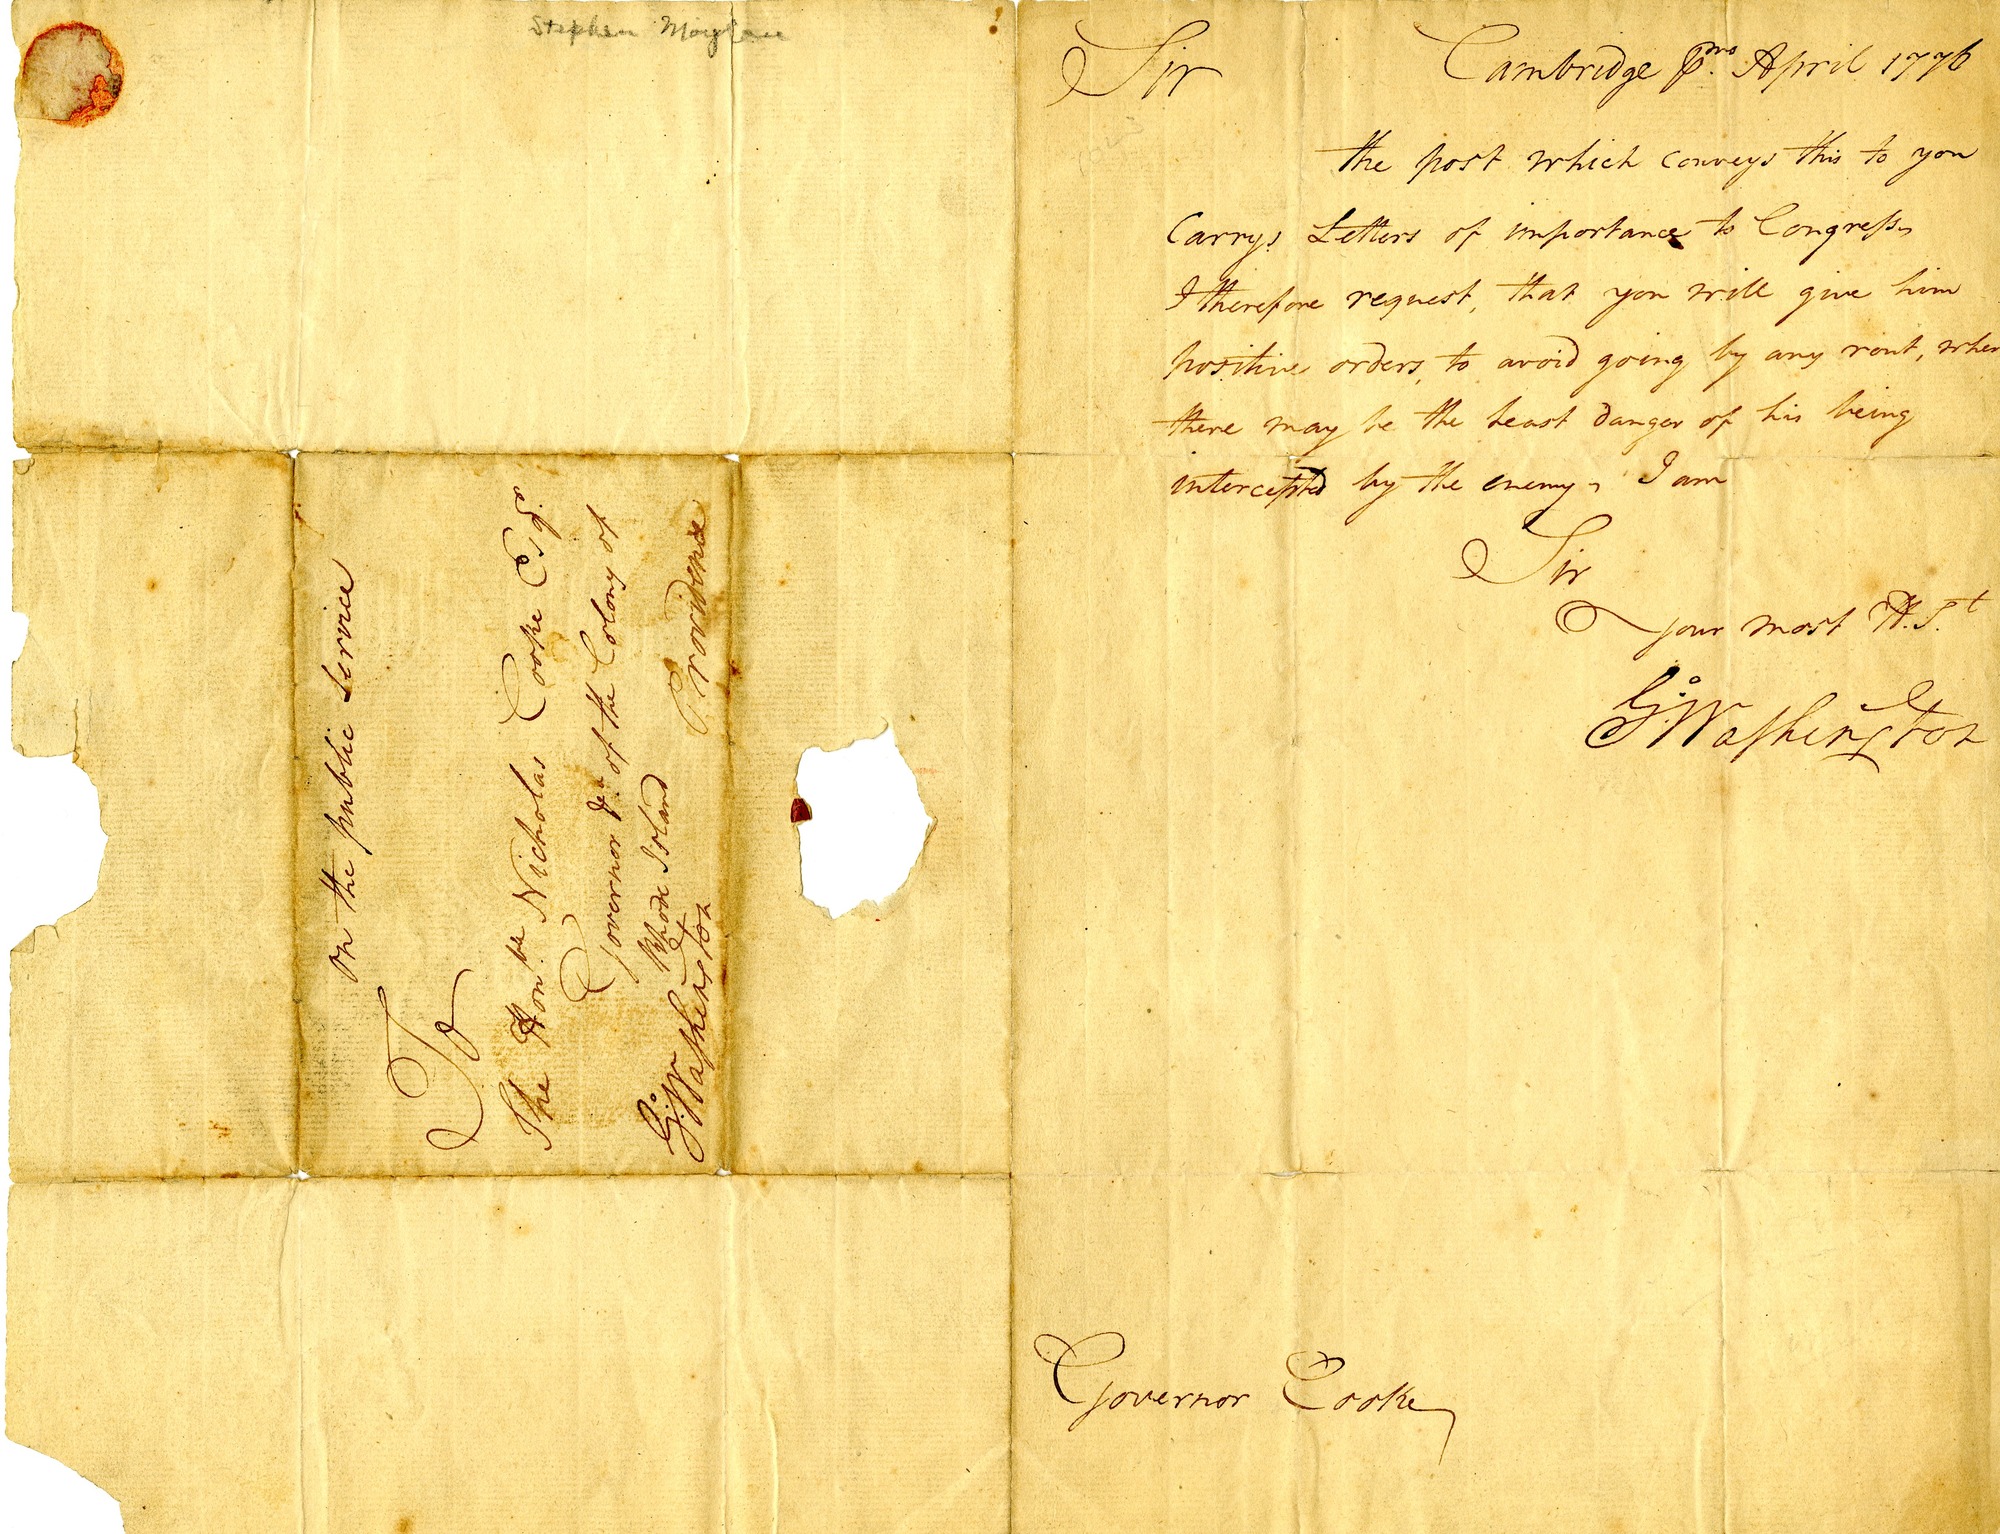 Manuscript letter on one leaf with signature of G. Washington.